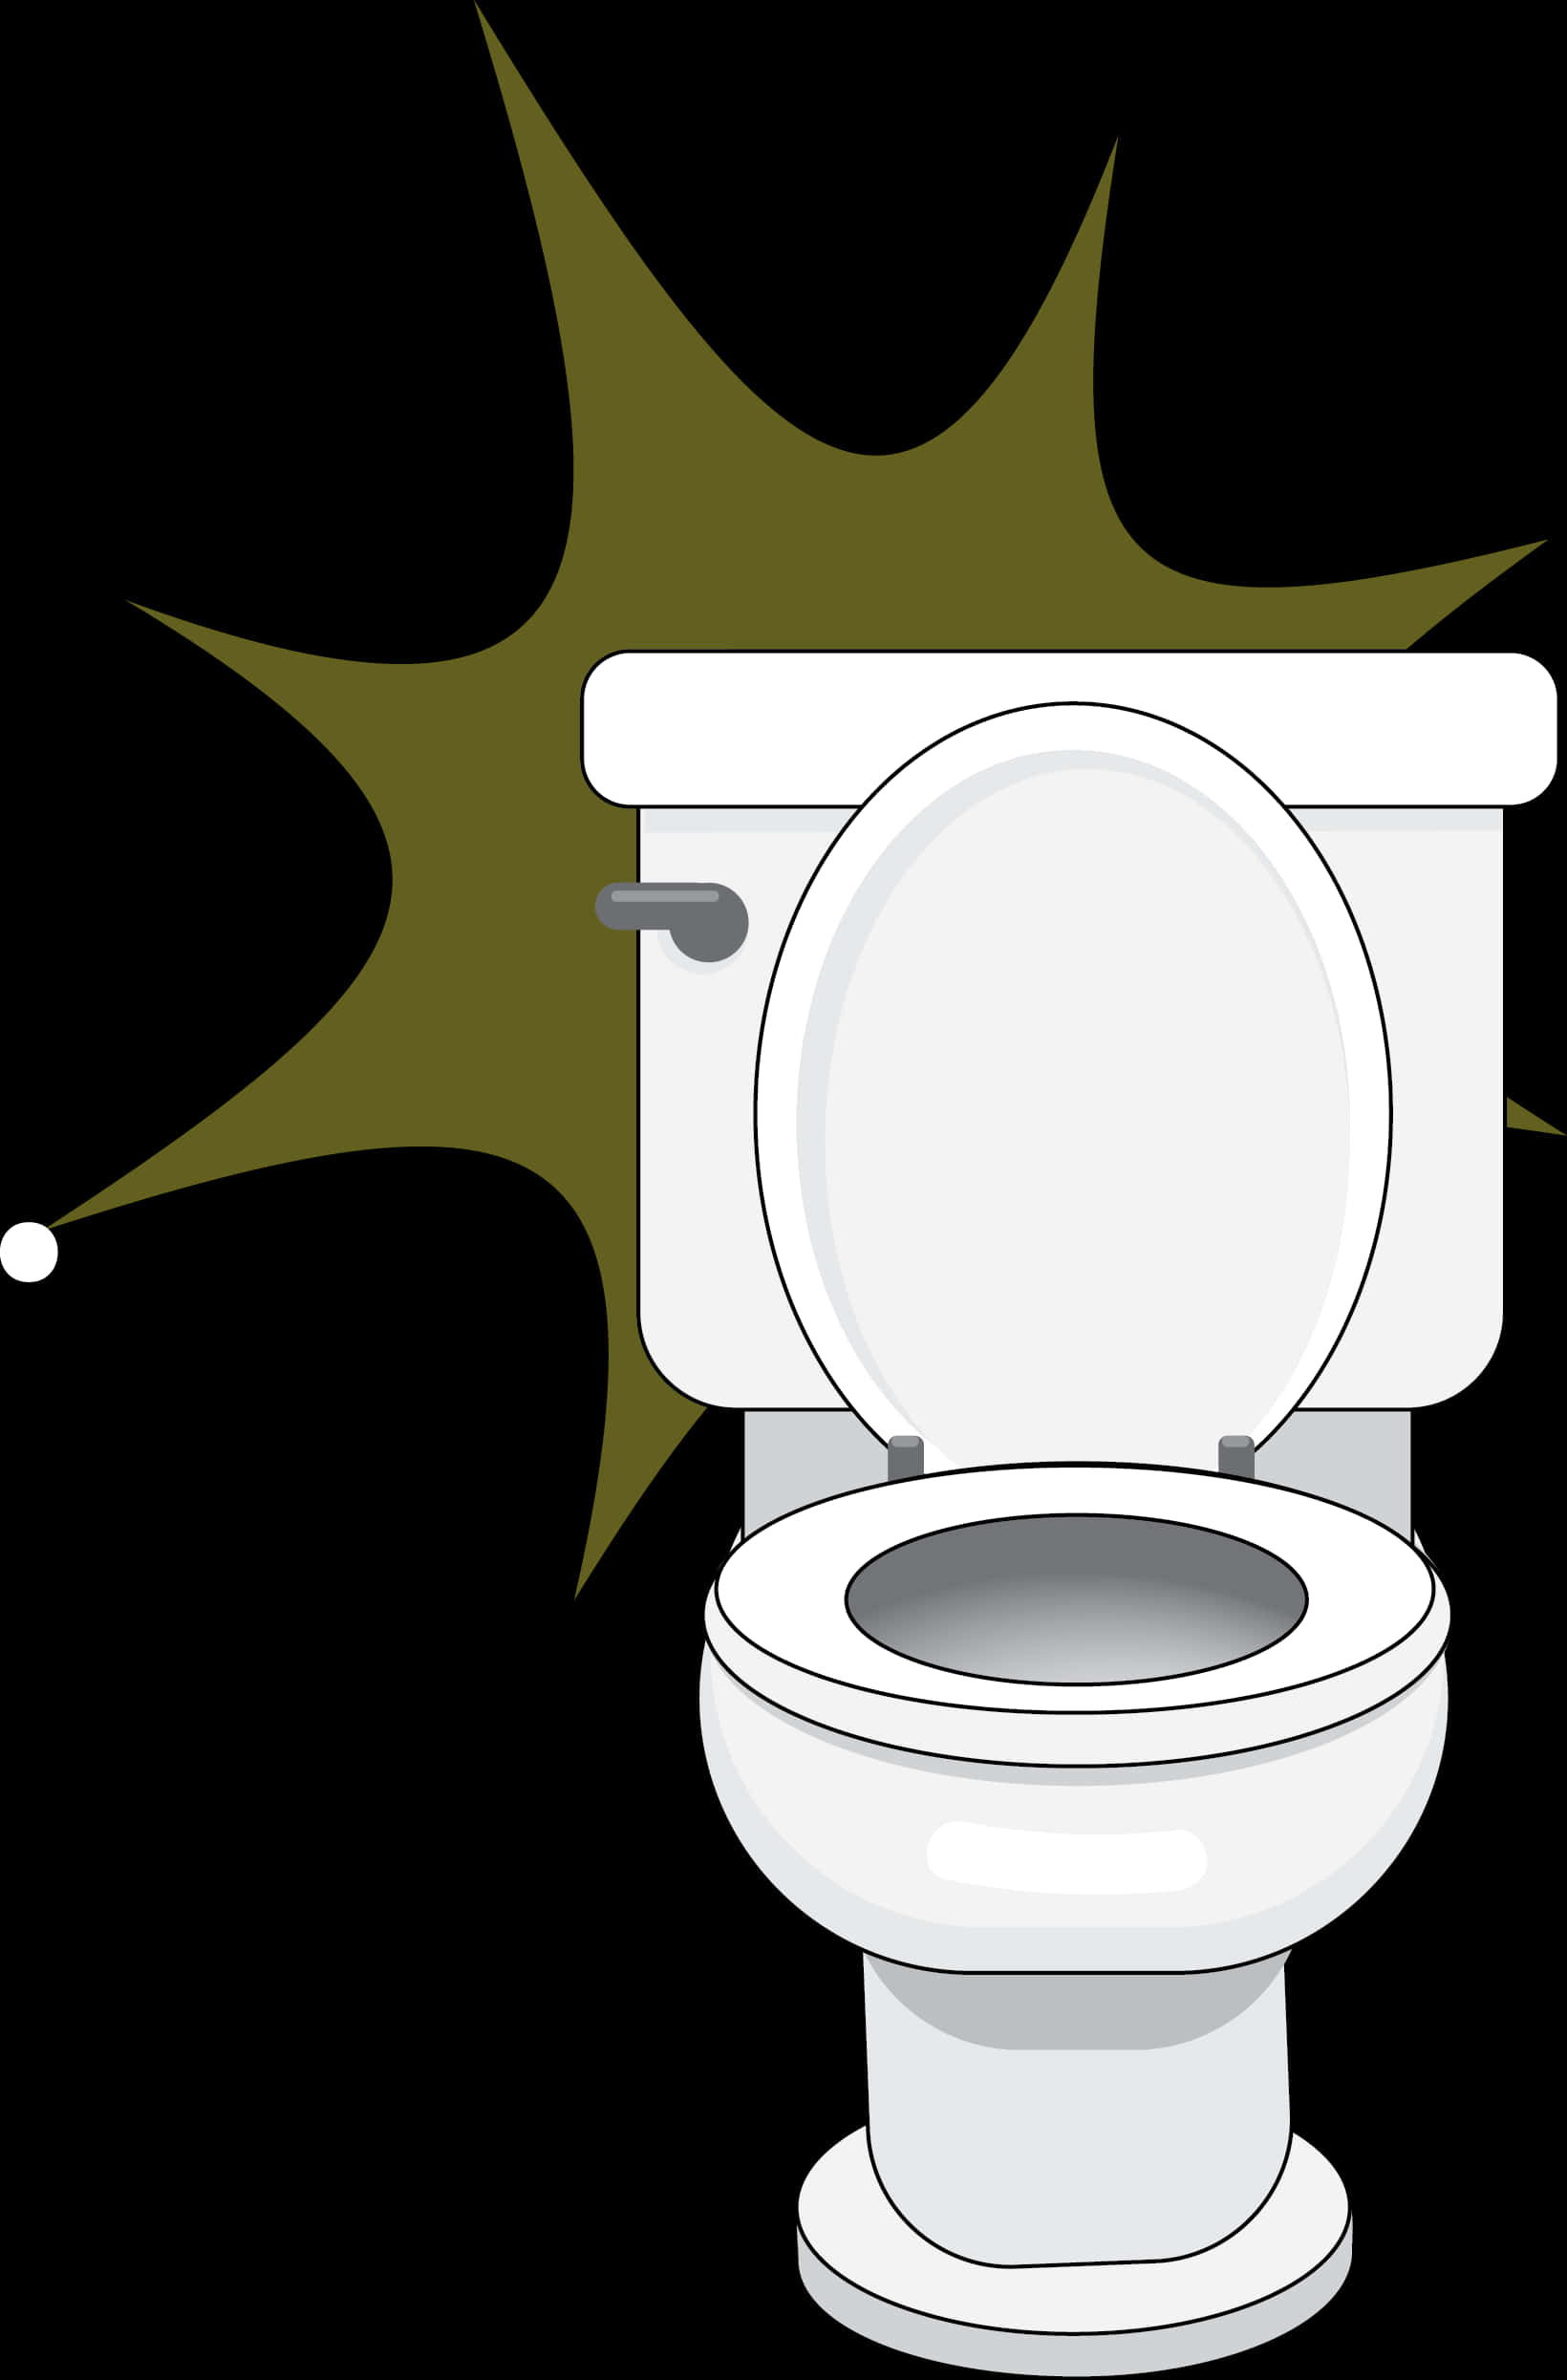 Exploding Toilet Cartoon